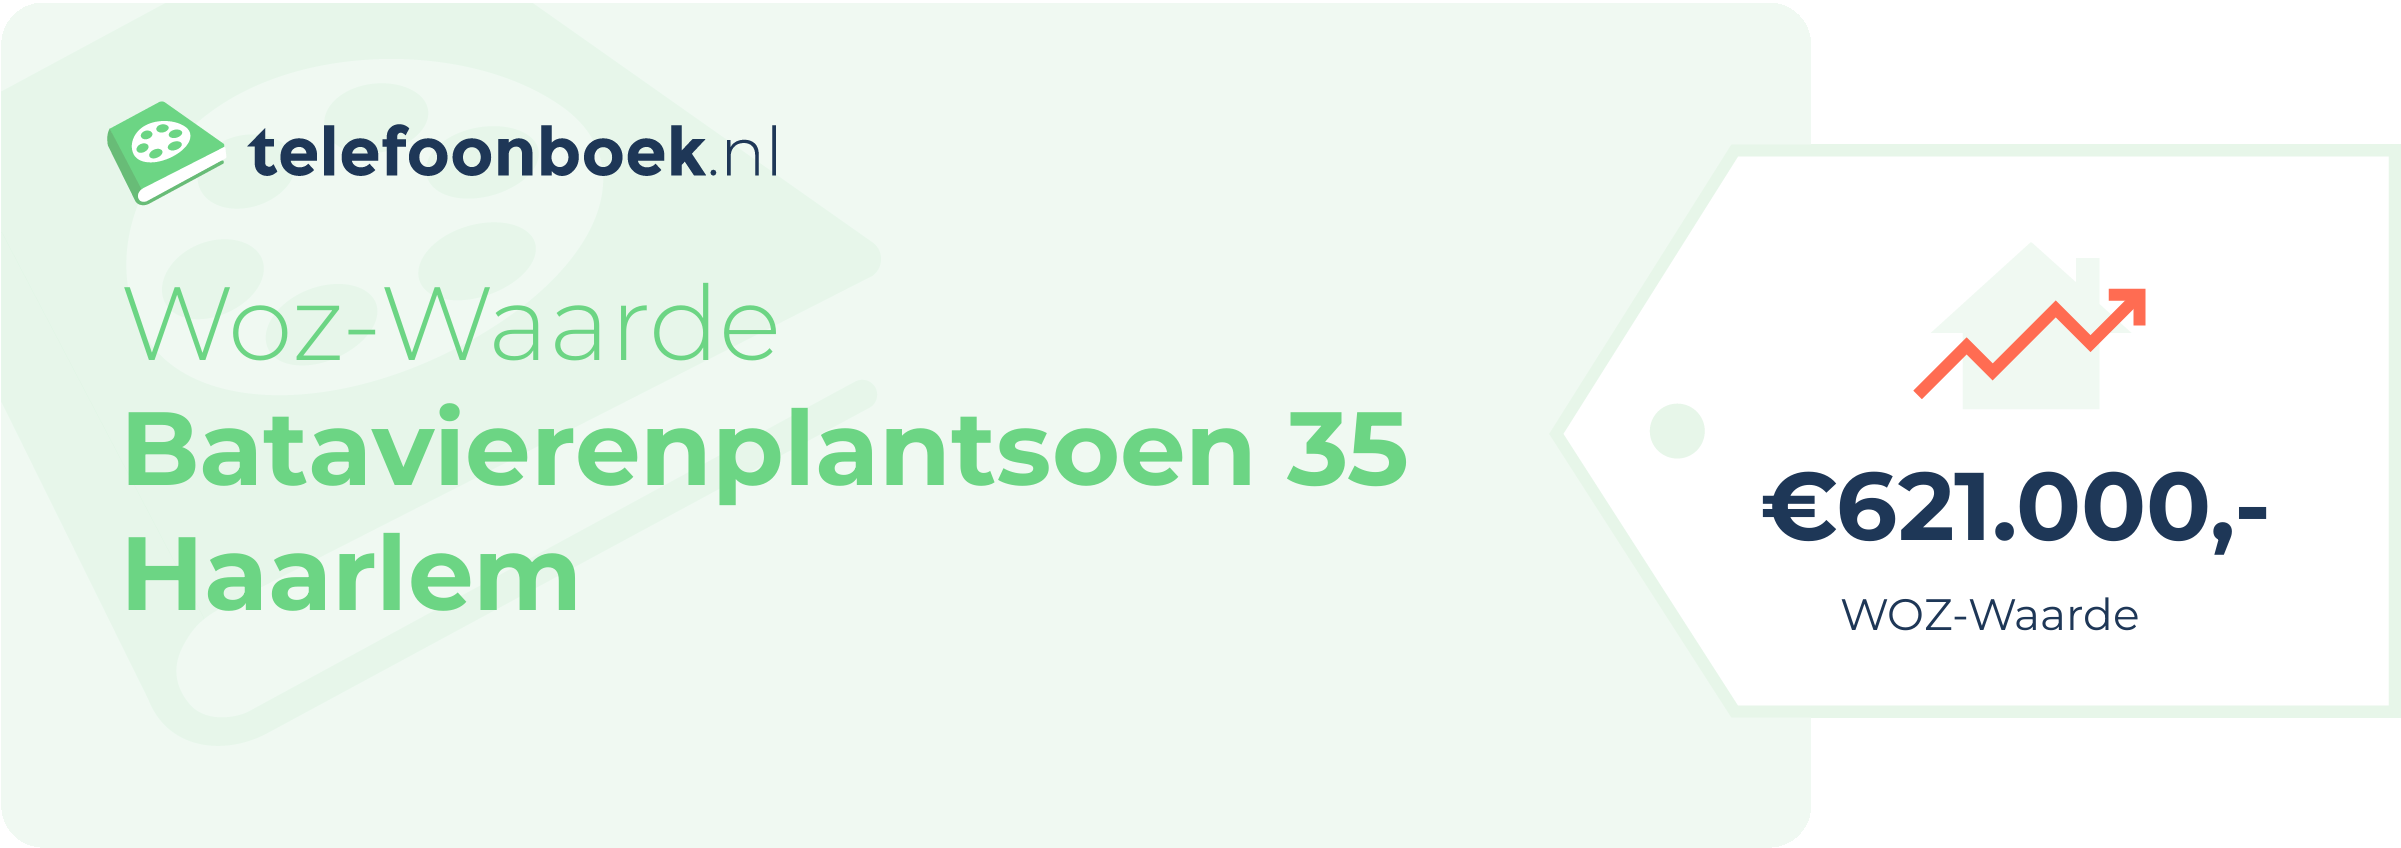 WOZ-waarde Batavierenplantsoen 35 Haarlem